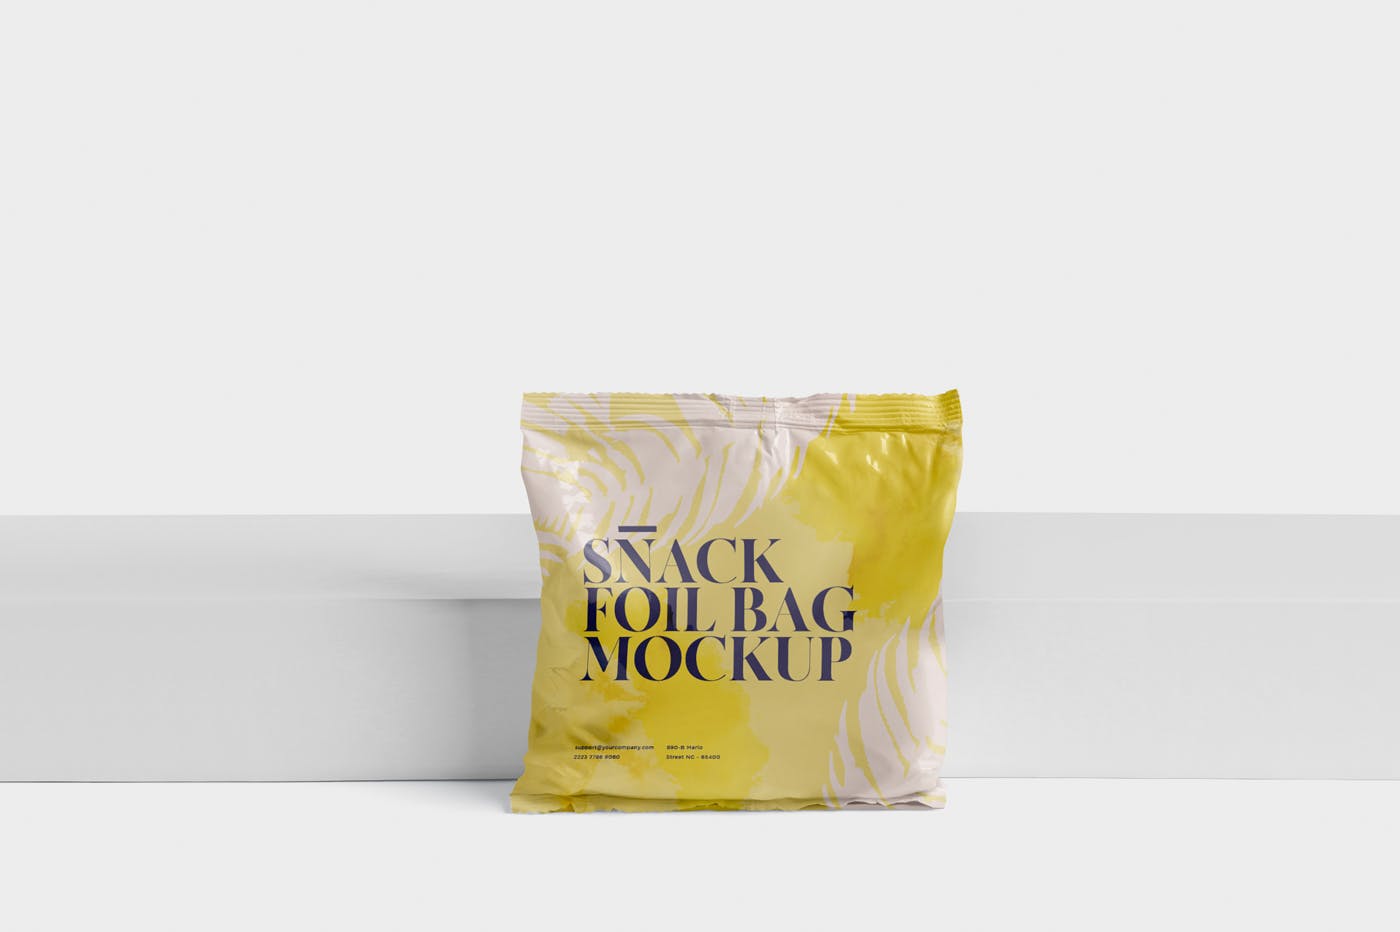 小吃零食铝箔包装袋设计图非凡图库精选 Snack Foil Bag Mockup – Square Size – Small插图(3)